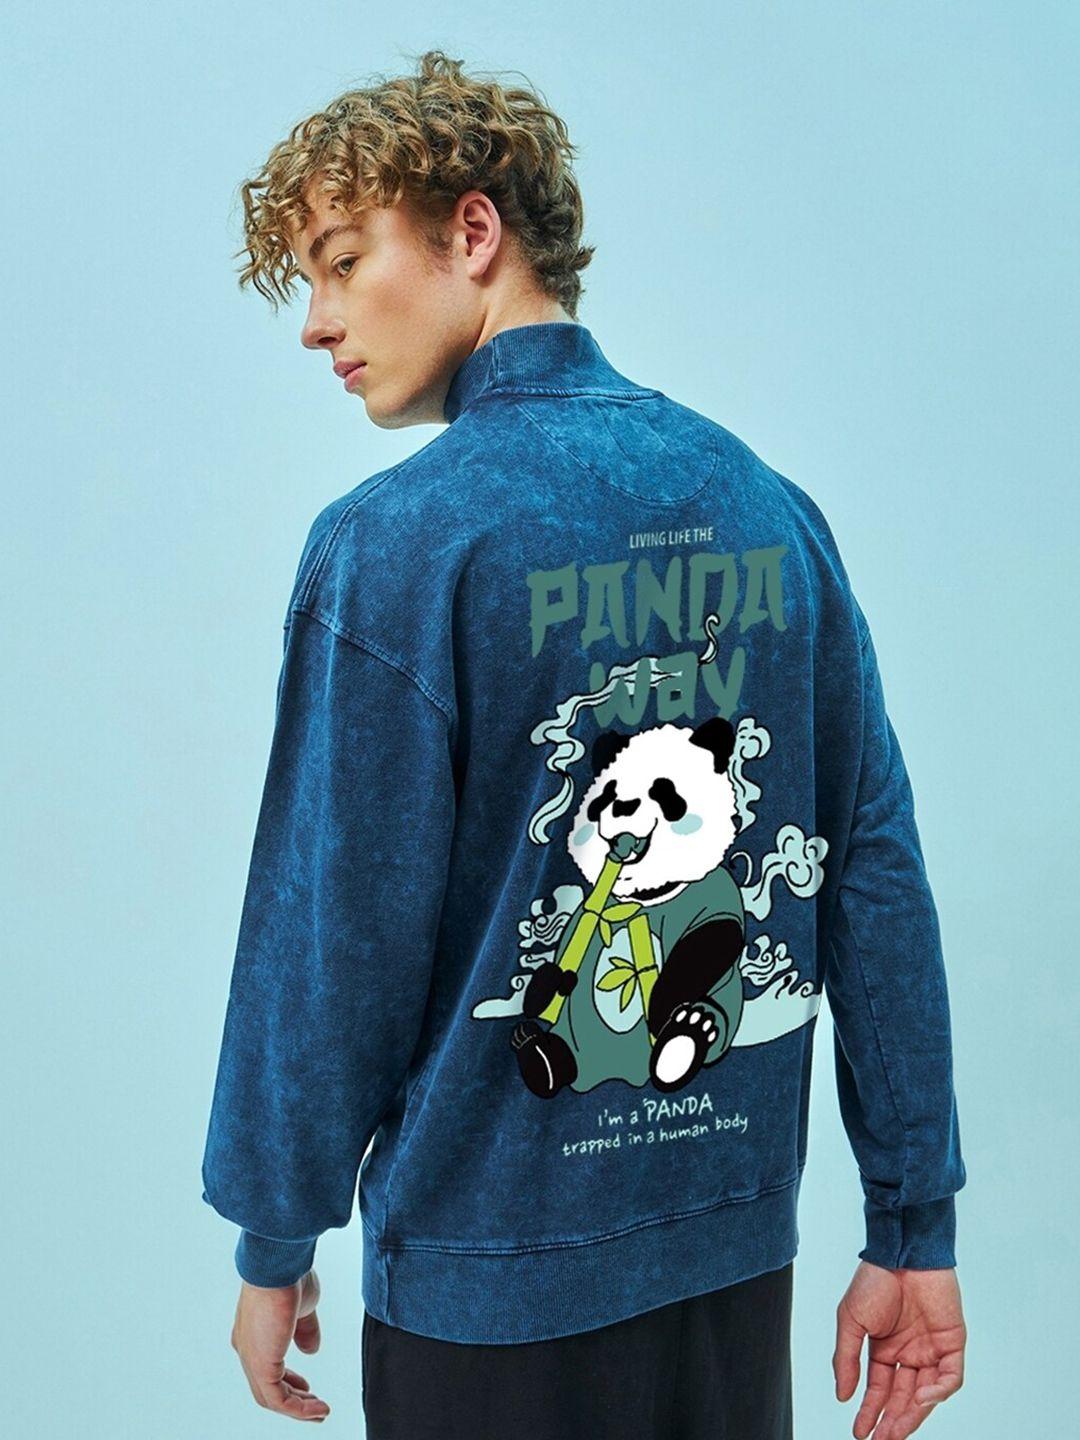 bewakoof the panda way graphic printed turtle neck oversized cotton pullover sweatshirt